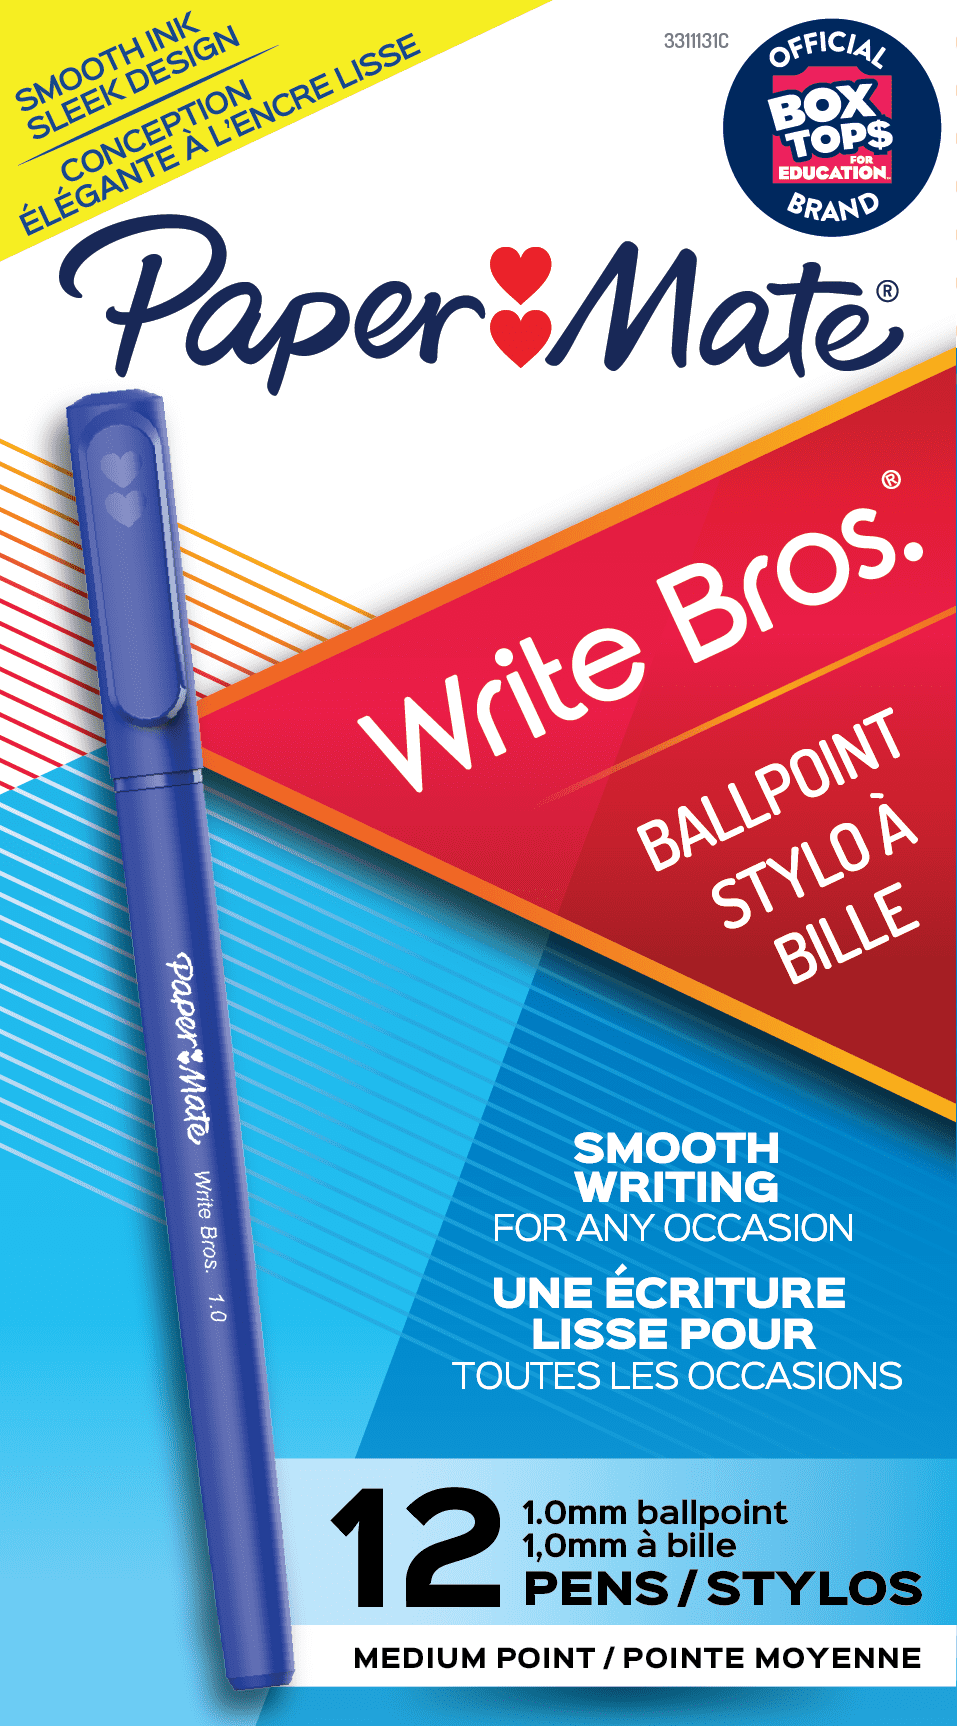 Paper Mate Write Bros Stick Ballpoint Pen Medium 1mm Blue Ink 60 Count 4621501 for sale online